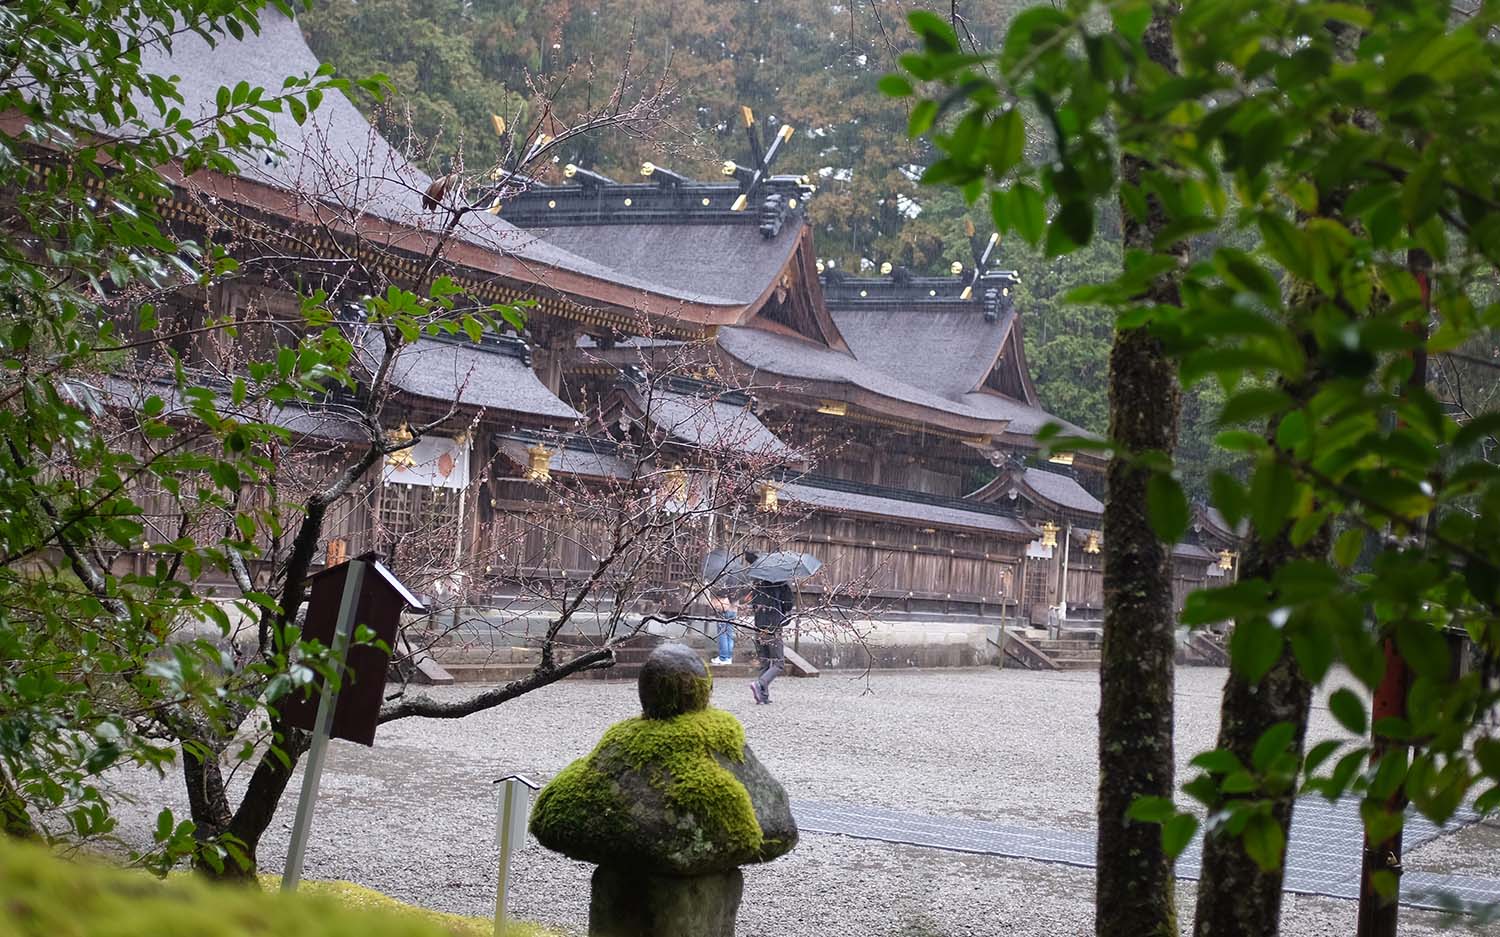 Kumano Hongu Taisha, one of the grand shrines of the Kumano Kodo